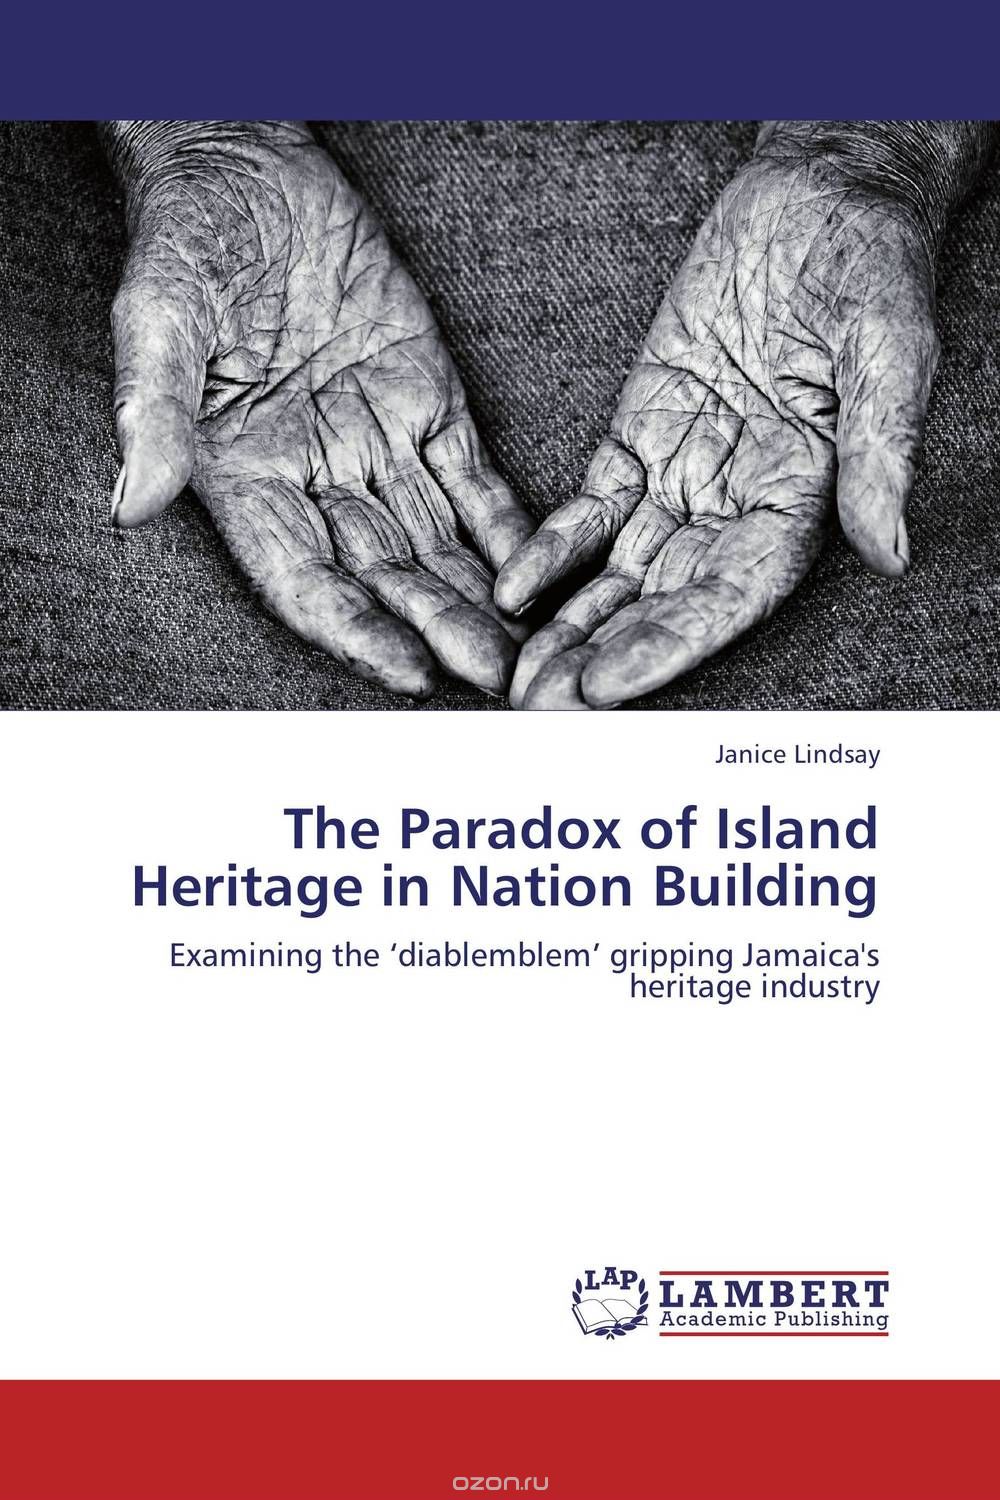 Скачать книгу "The Paradox of Island Heritage in Nation Building"